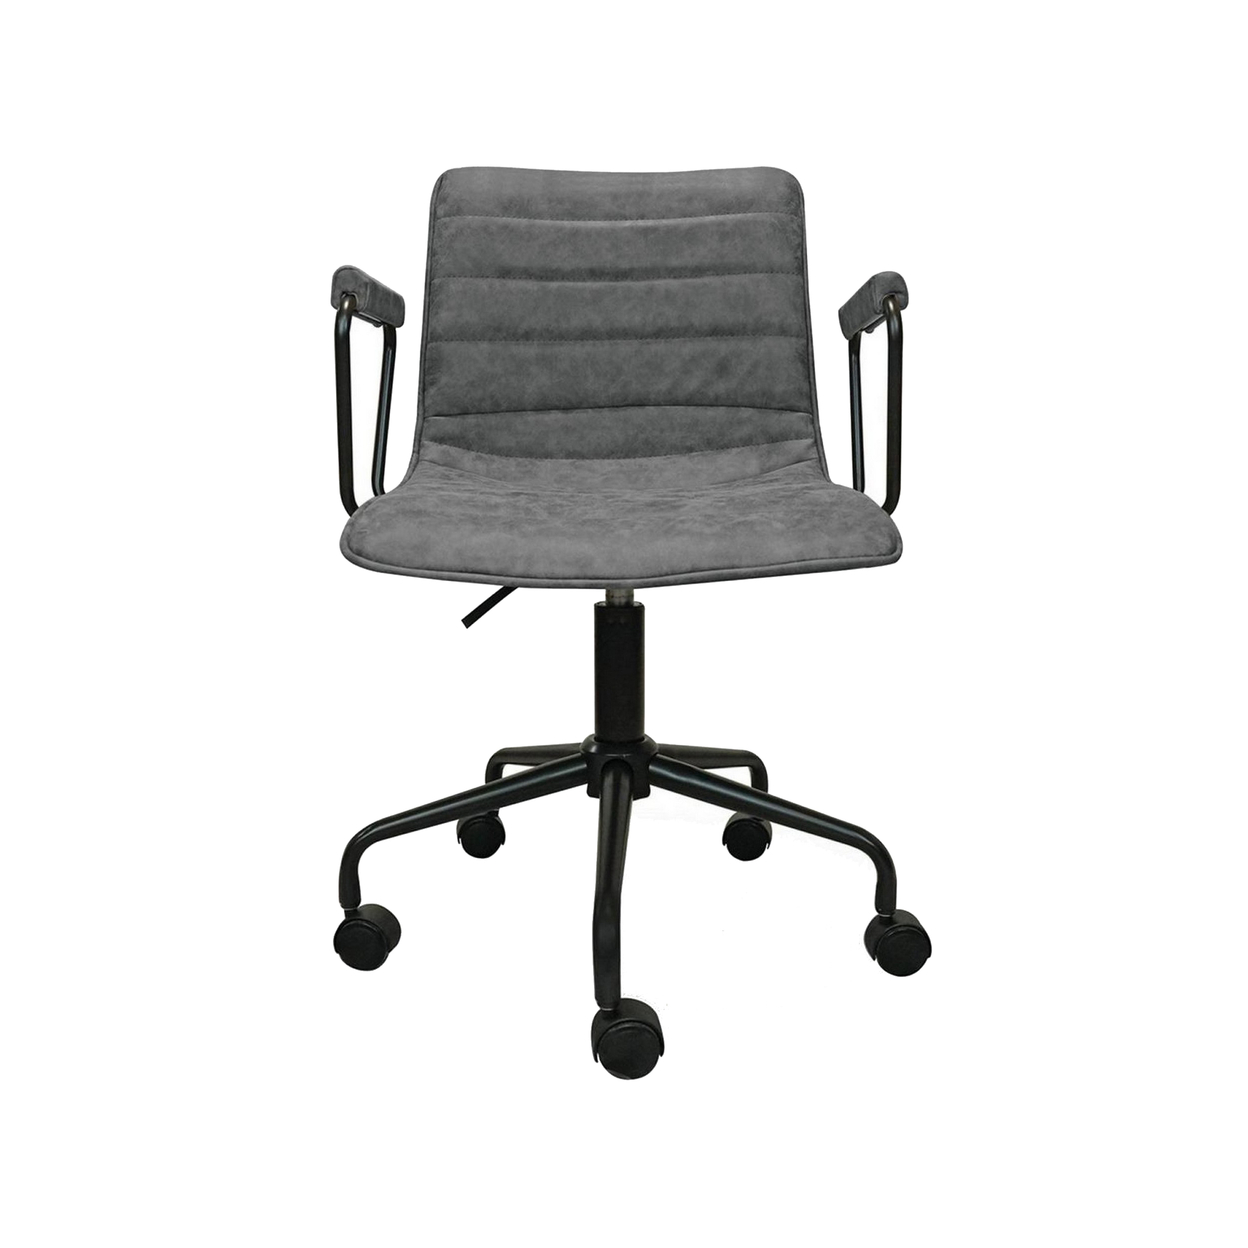 19 Inch Swivel Office Chair, Adjustable Height, Gray Microfiber Upholstery- Saltoro Sherpi